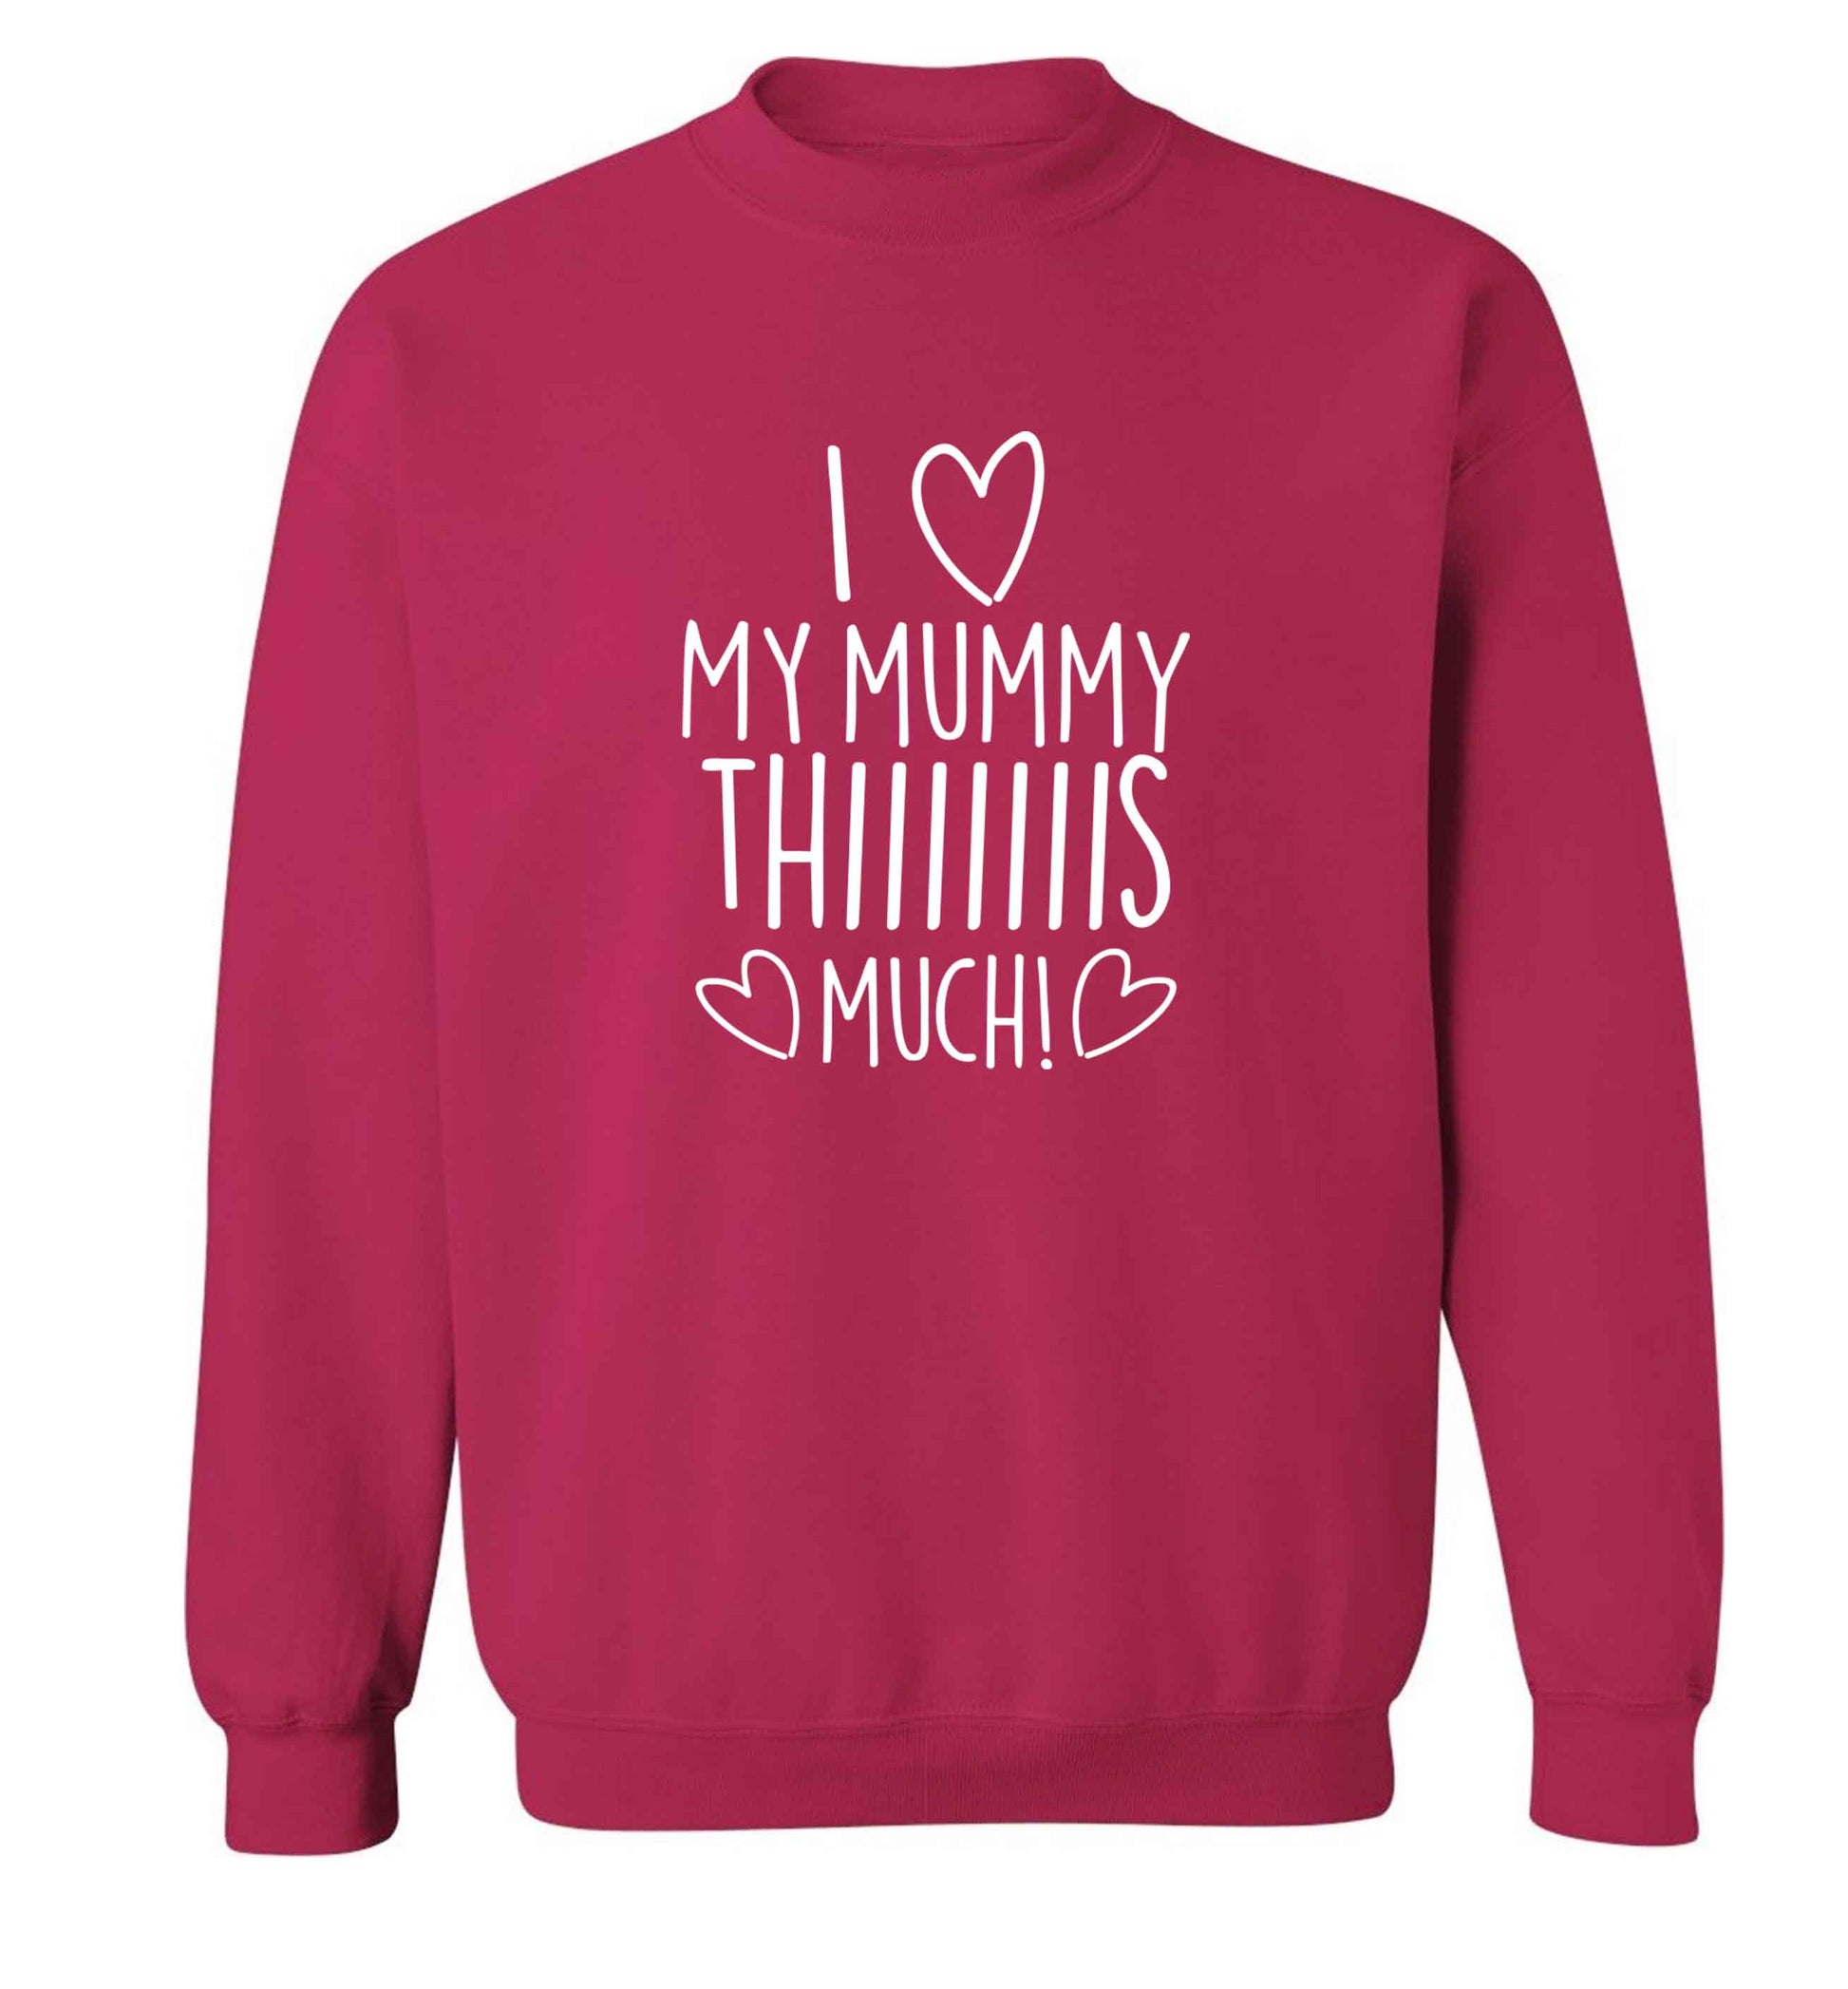 I love my mummy thiiiiis much! adult's unisex pink sweater 2XL